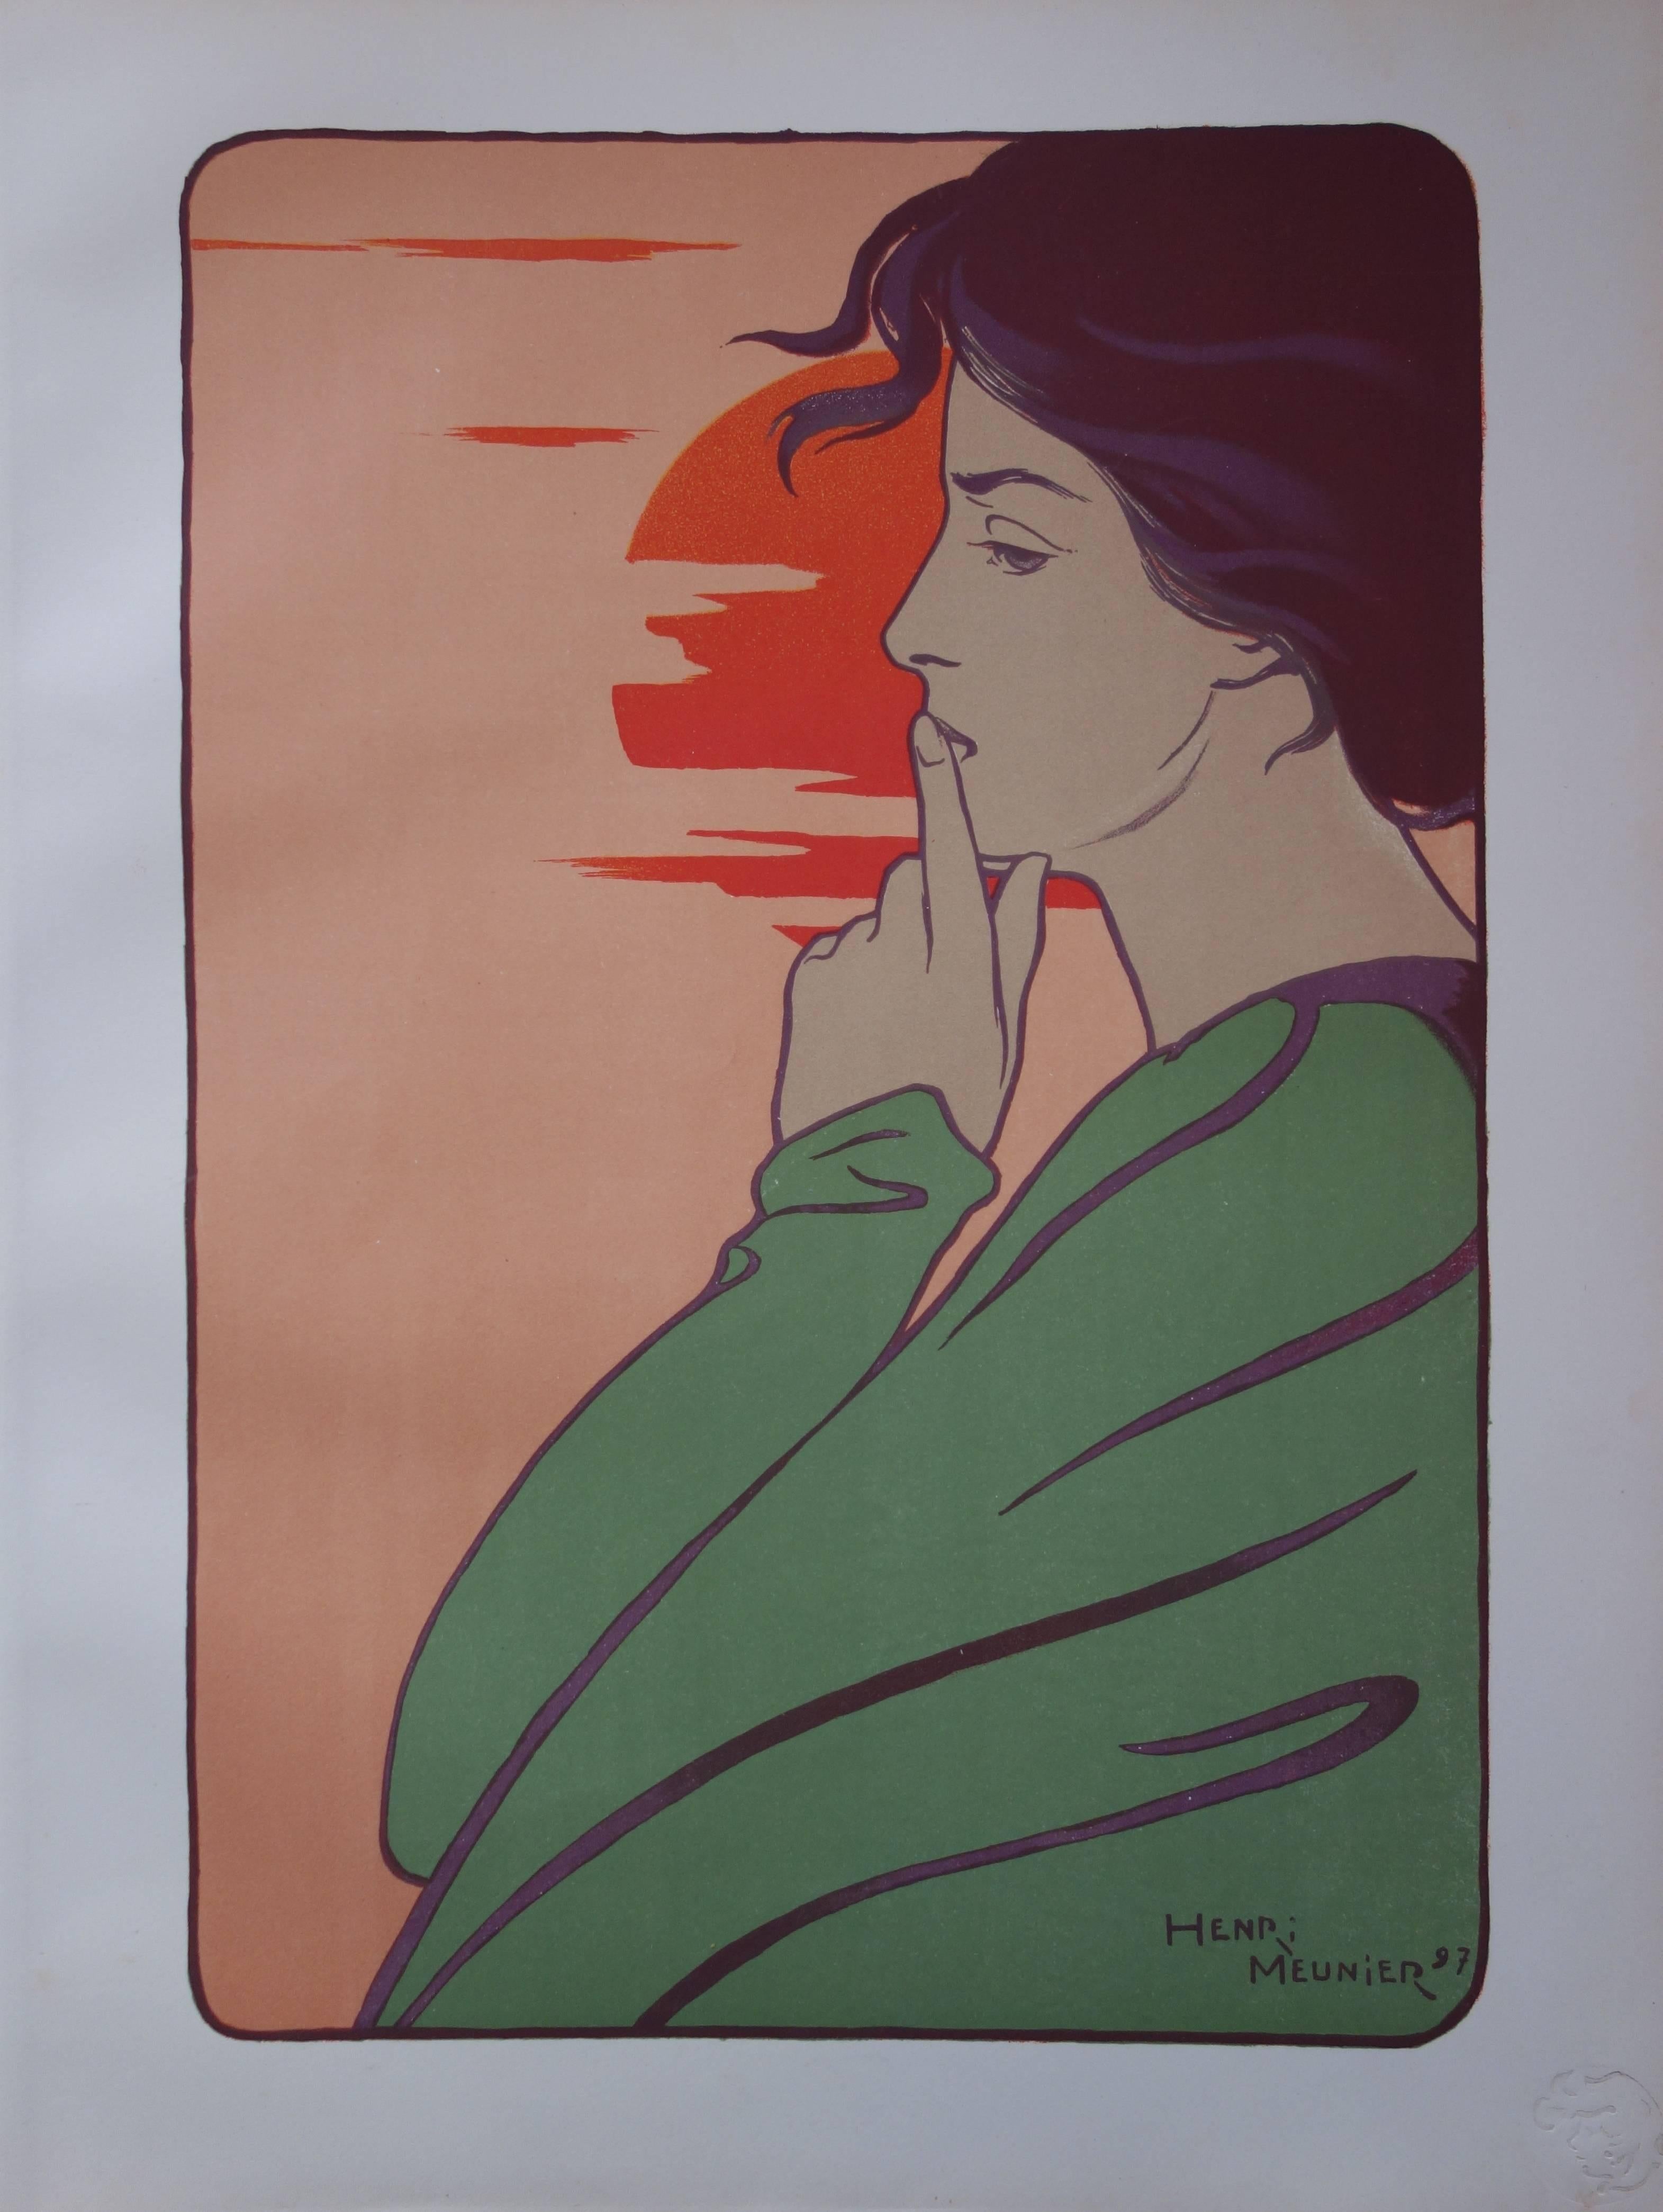 Henri Meunier Figurative Print - L'heure du silence - Original lithograph (1897/98)